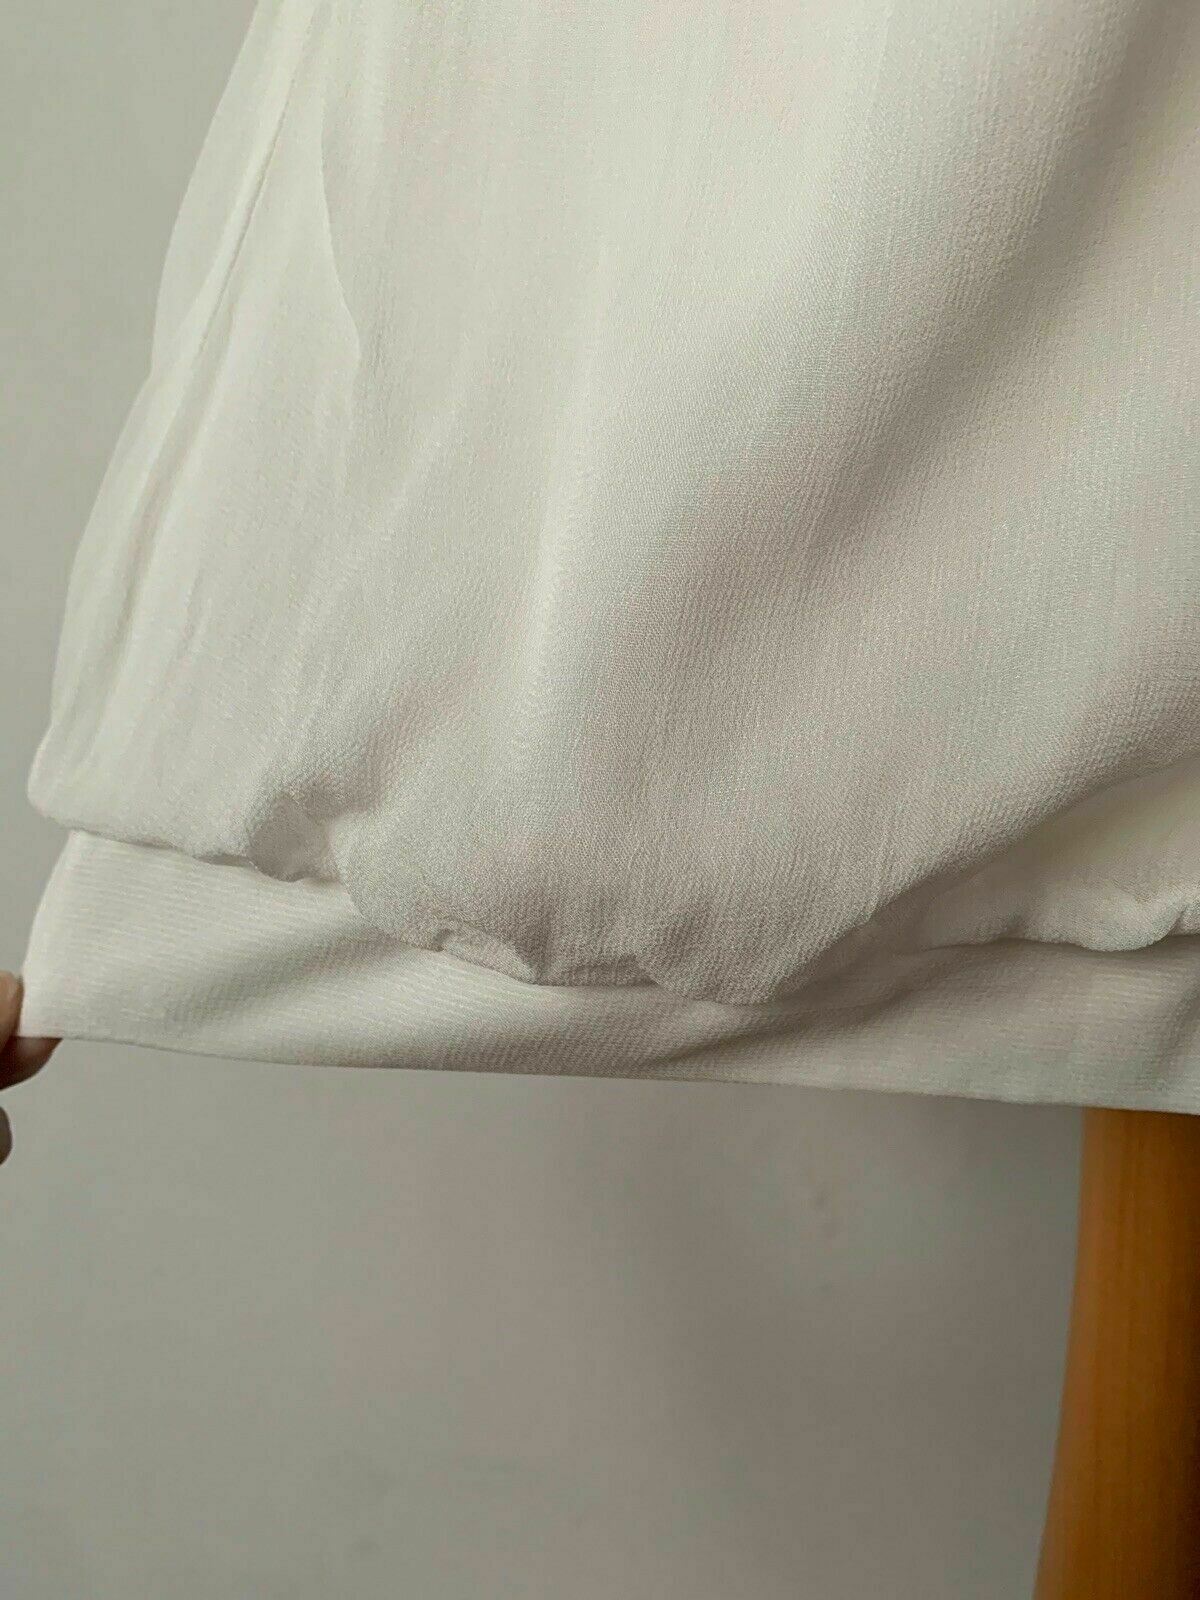 Monsoon sleeveless Ivory top Frill Neckline Metallic Embroided Size 18 Chiffon